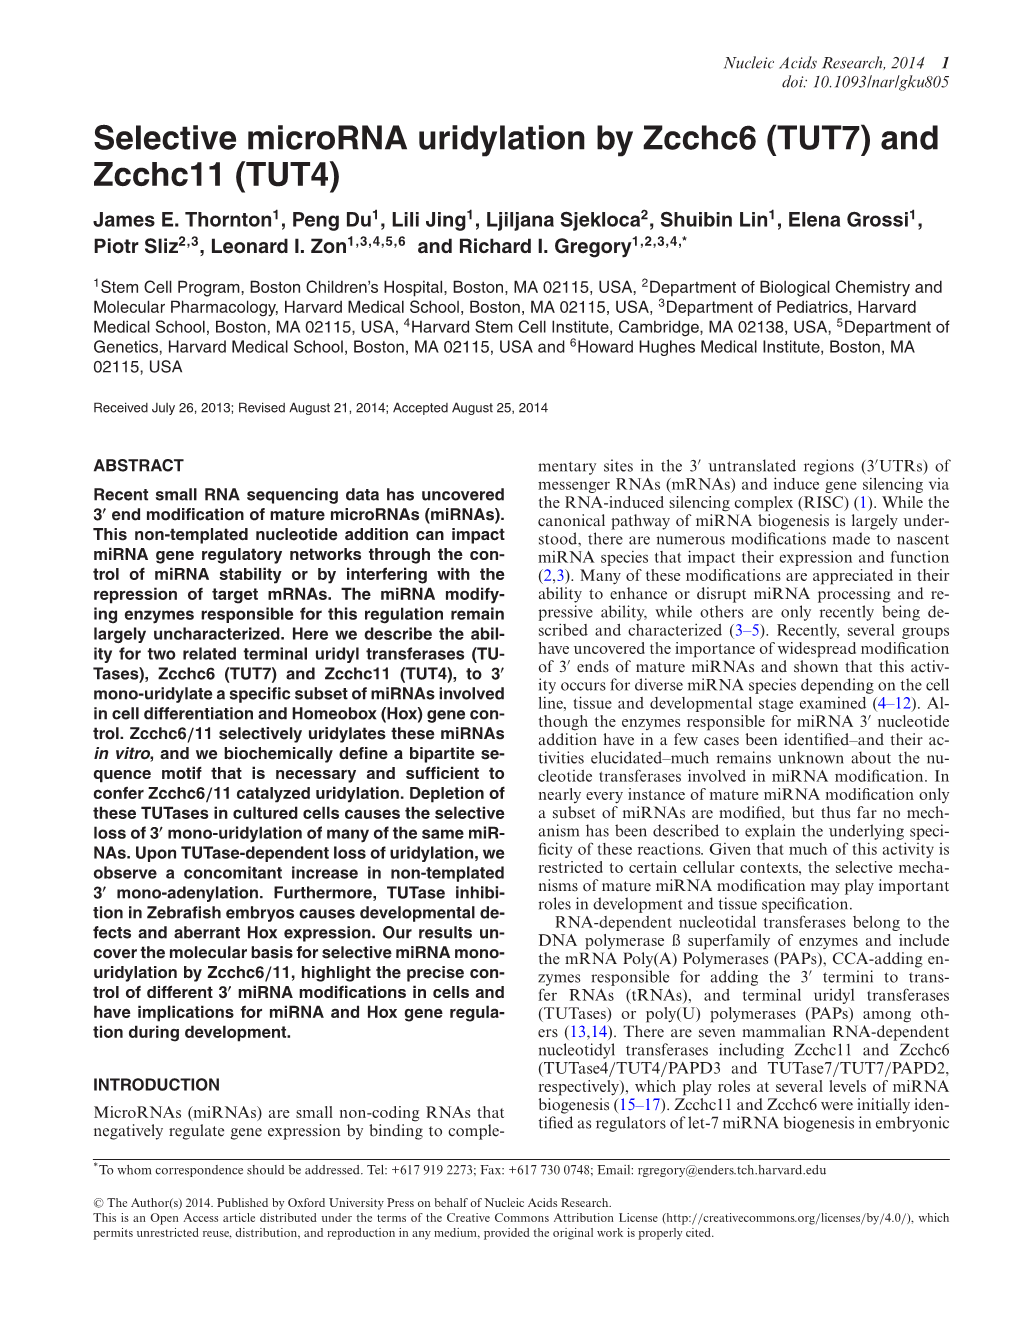 Selective Microrna Uridylation by Zcchc6 (TUT7) and Zcchc11 (TUT4) James E